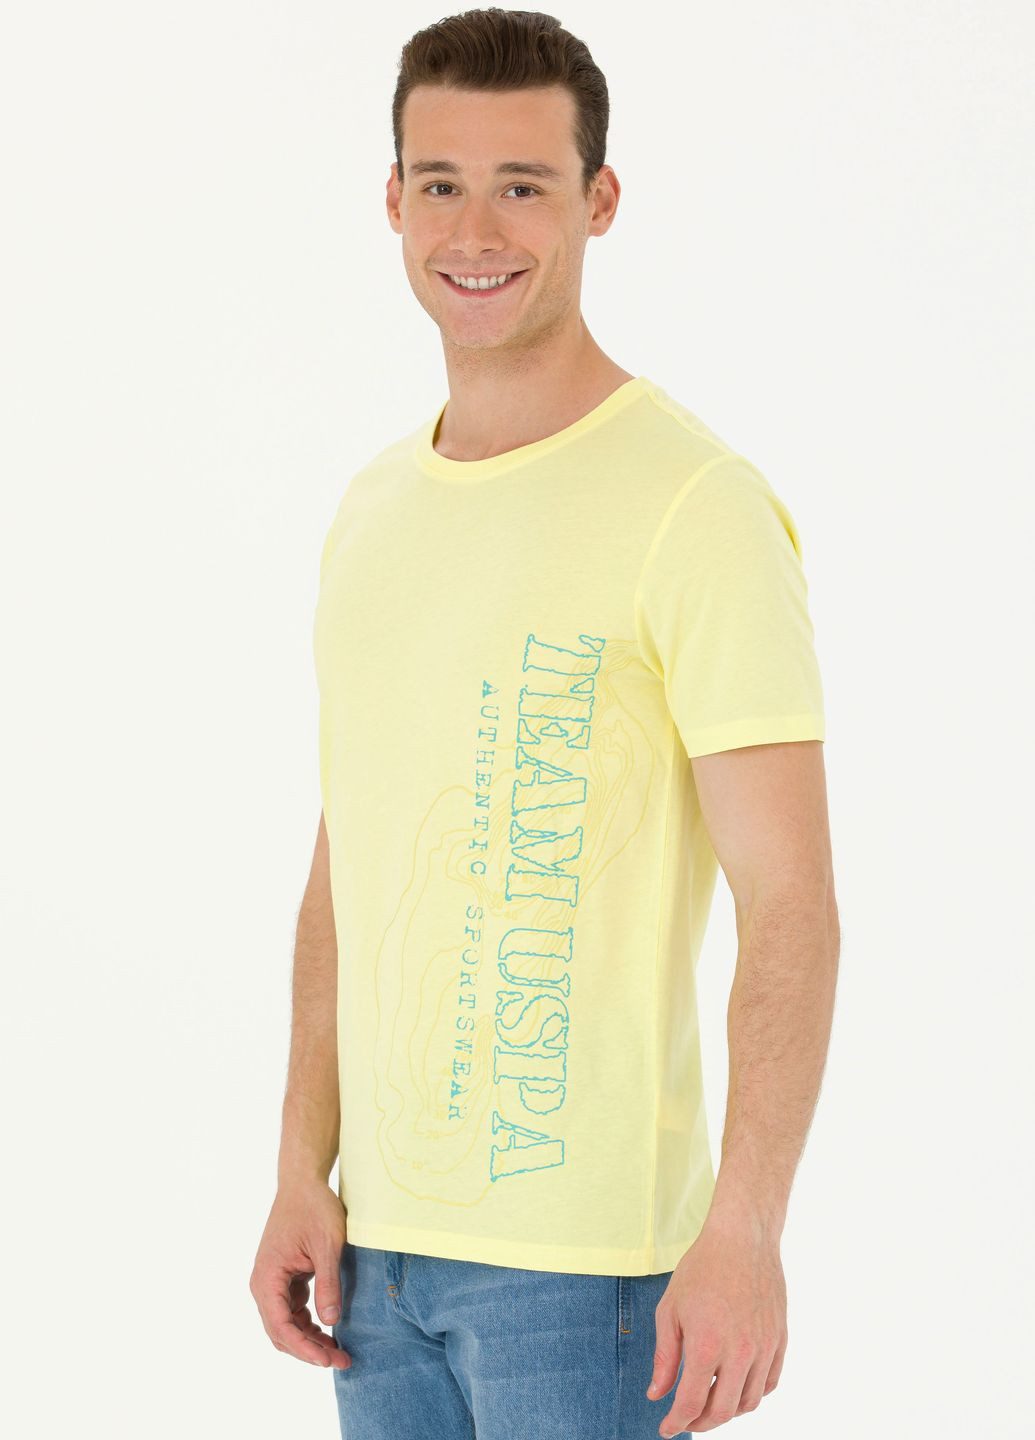 Светло-желтая футболка-футболка u.s/ polo assn. мужская для мужчин U.S. Polo Assn.